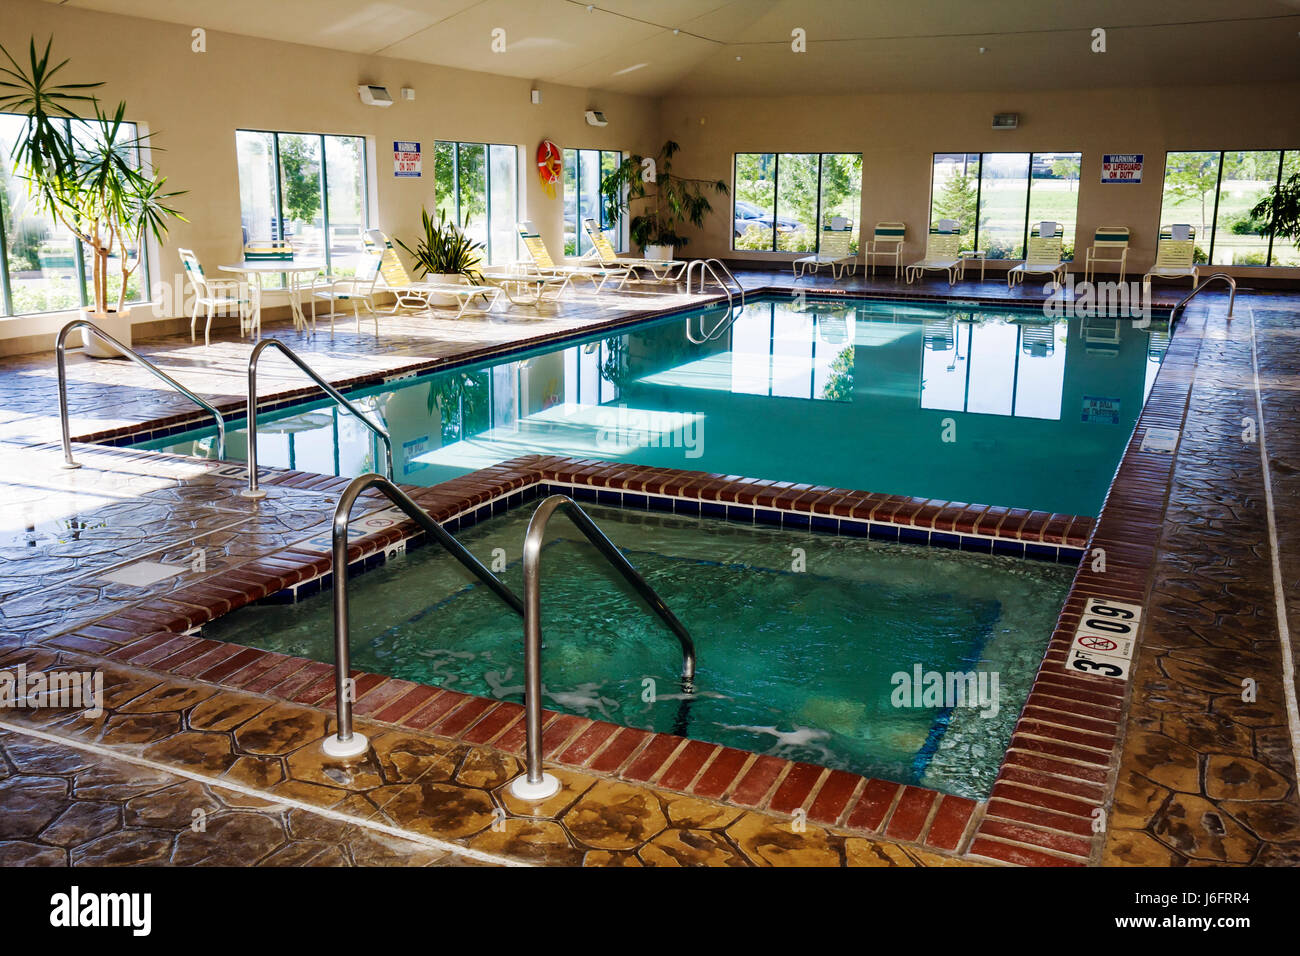 Wisconsin Kenosha County,Kenosha,Holiday Inn,Express,indoor swimming pool,Jacuzzi,lounge chairs,WI080713001 Stock Photo